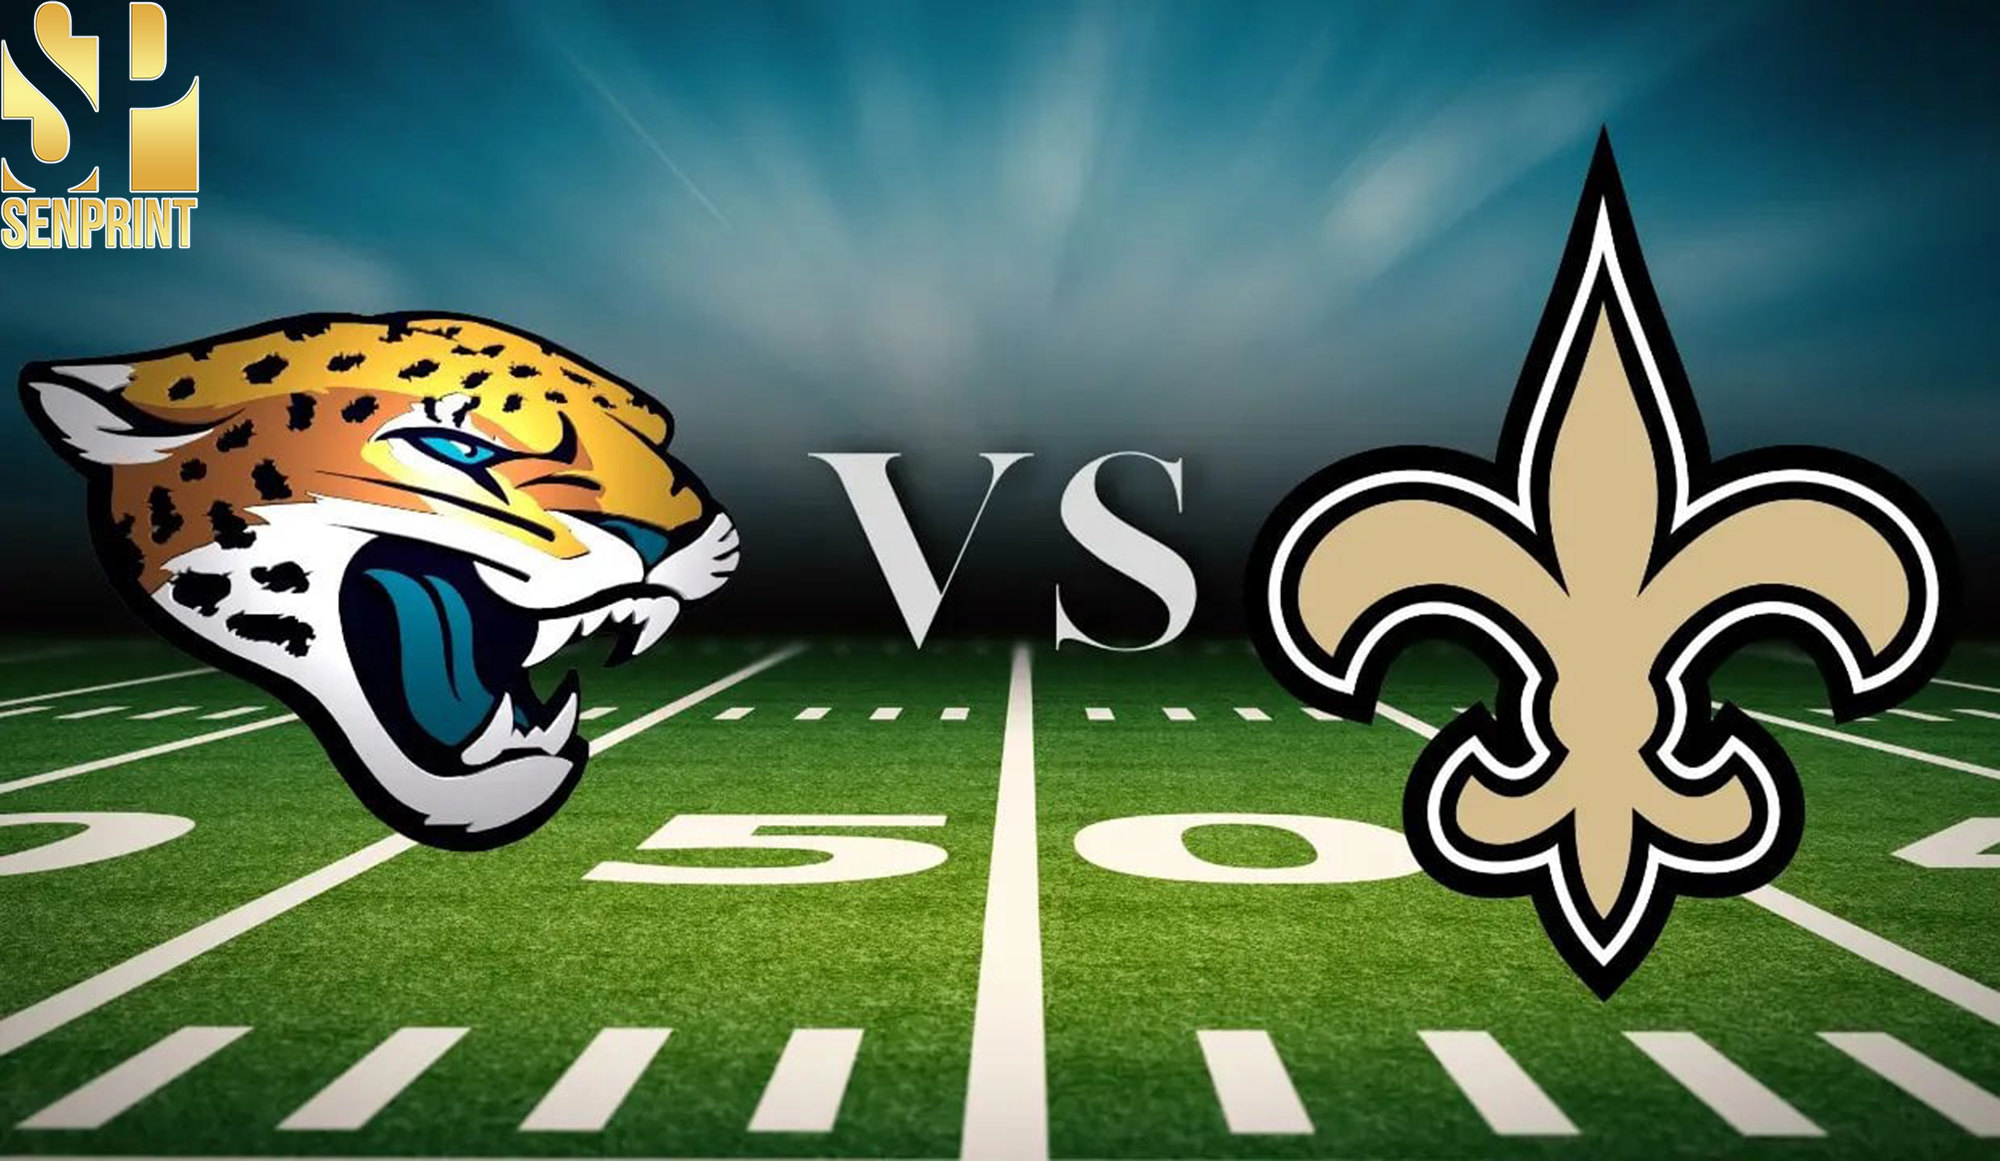 Prime-time Thriller Jaguars vs Saints Thursday Night Football Showdown Lights Up the Season